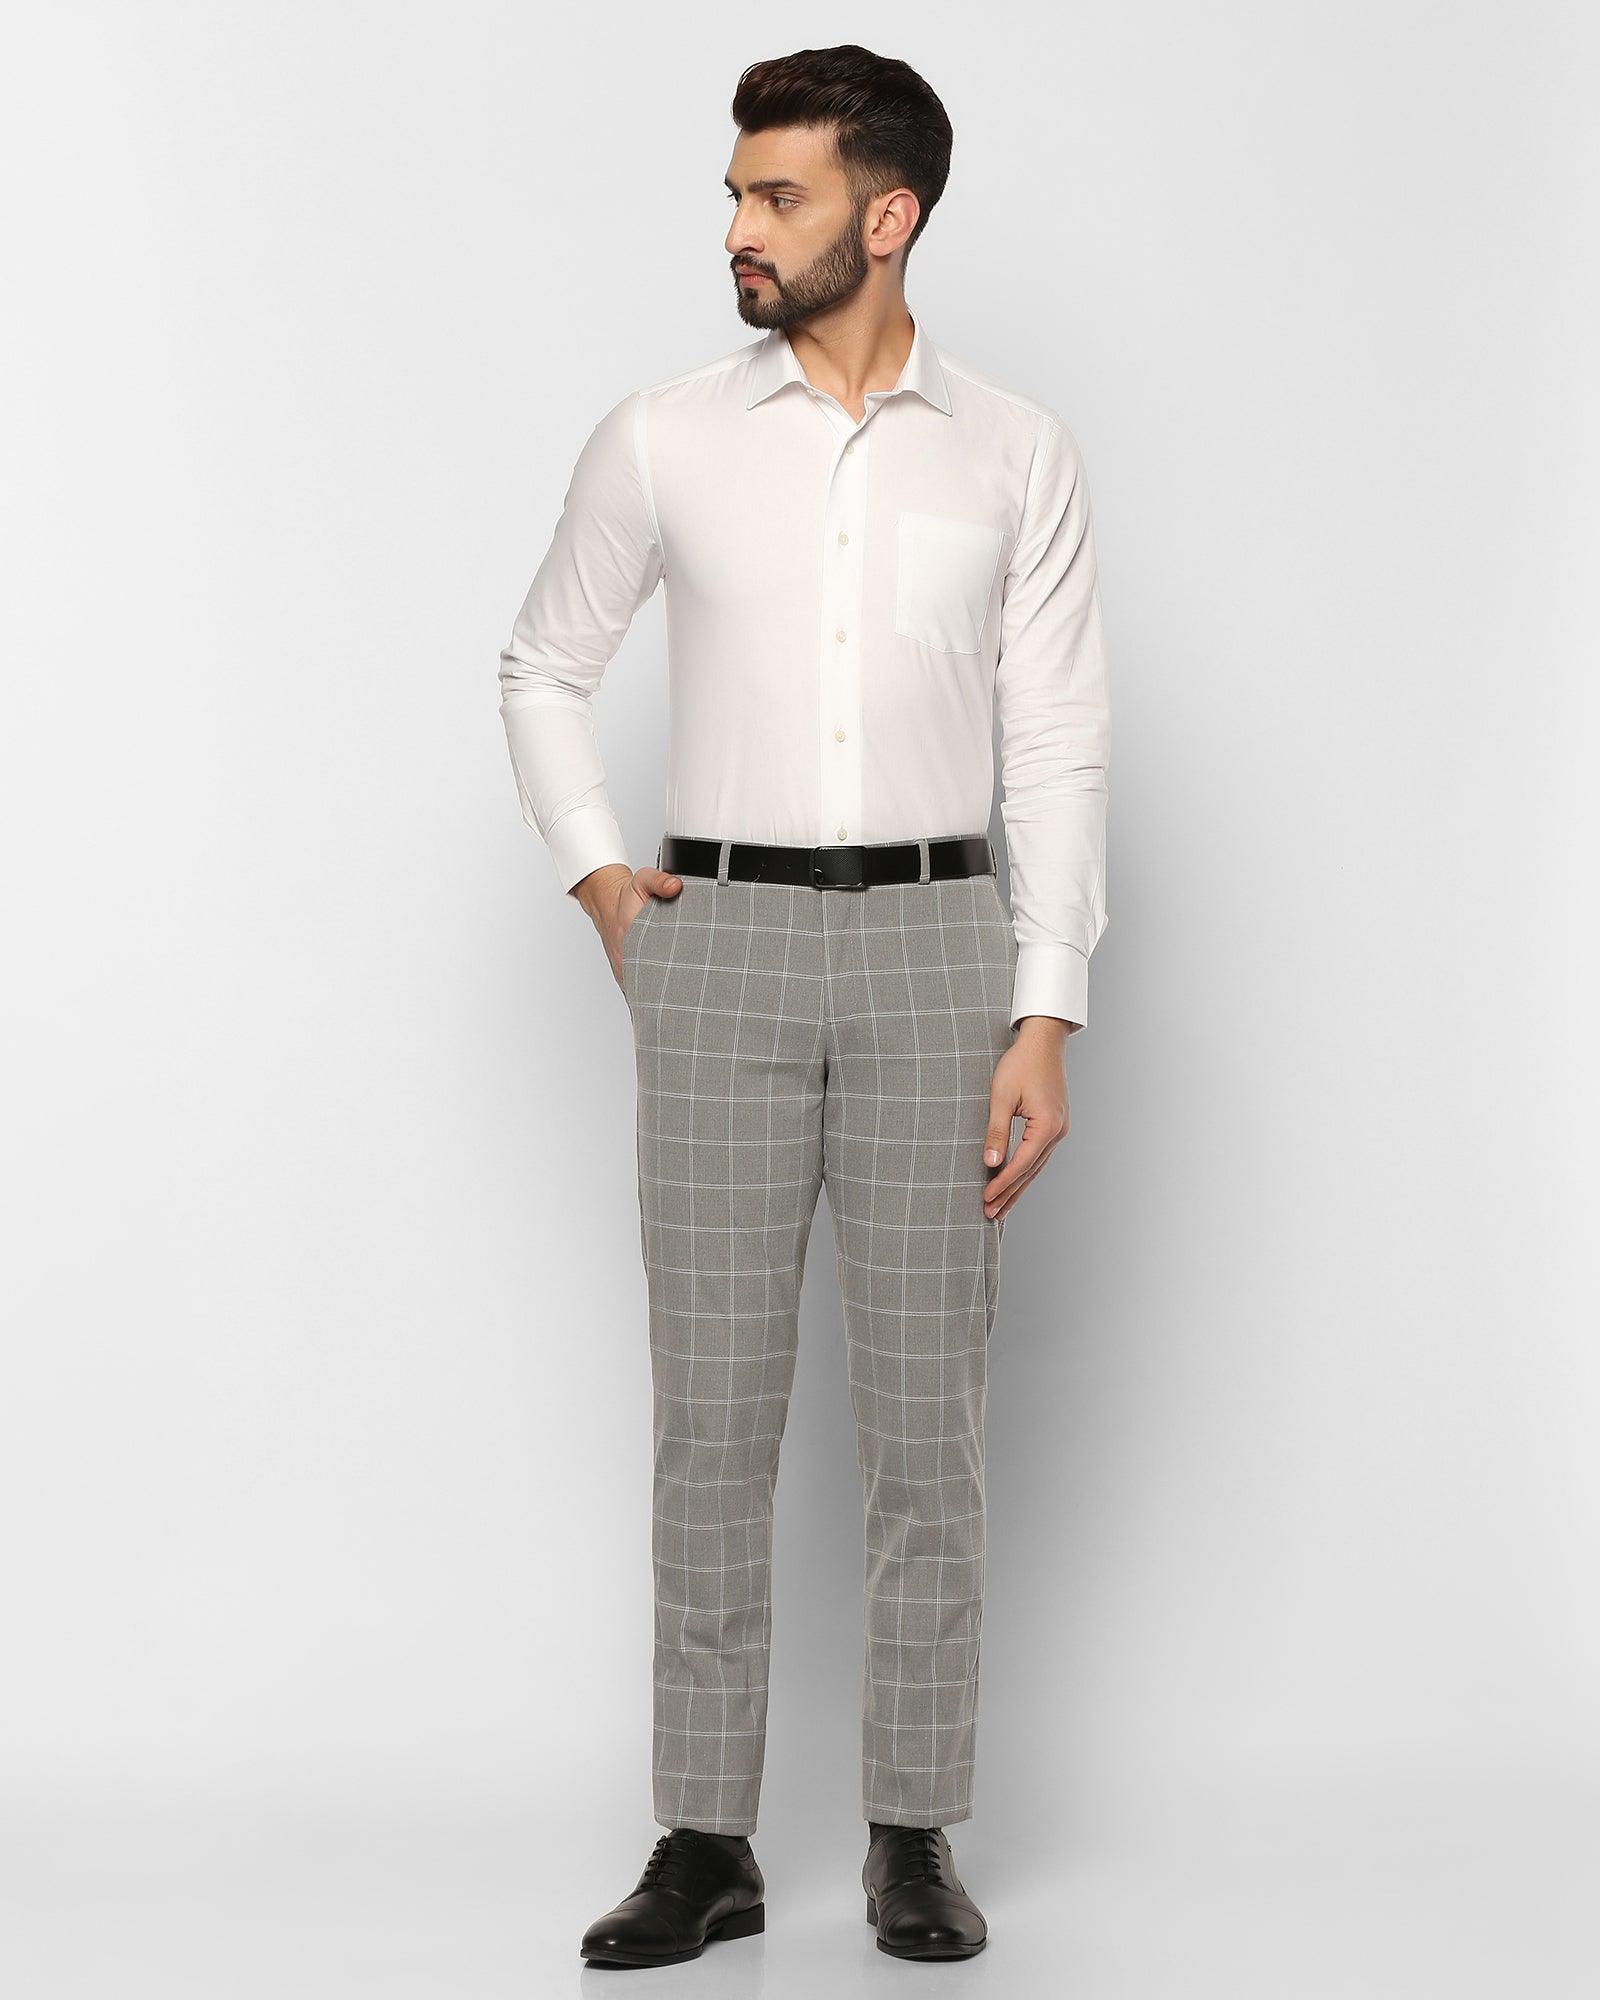 Slim Fit B-91 Formal Grey Check Trouser - Jole